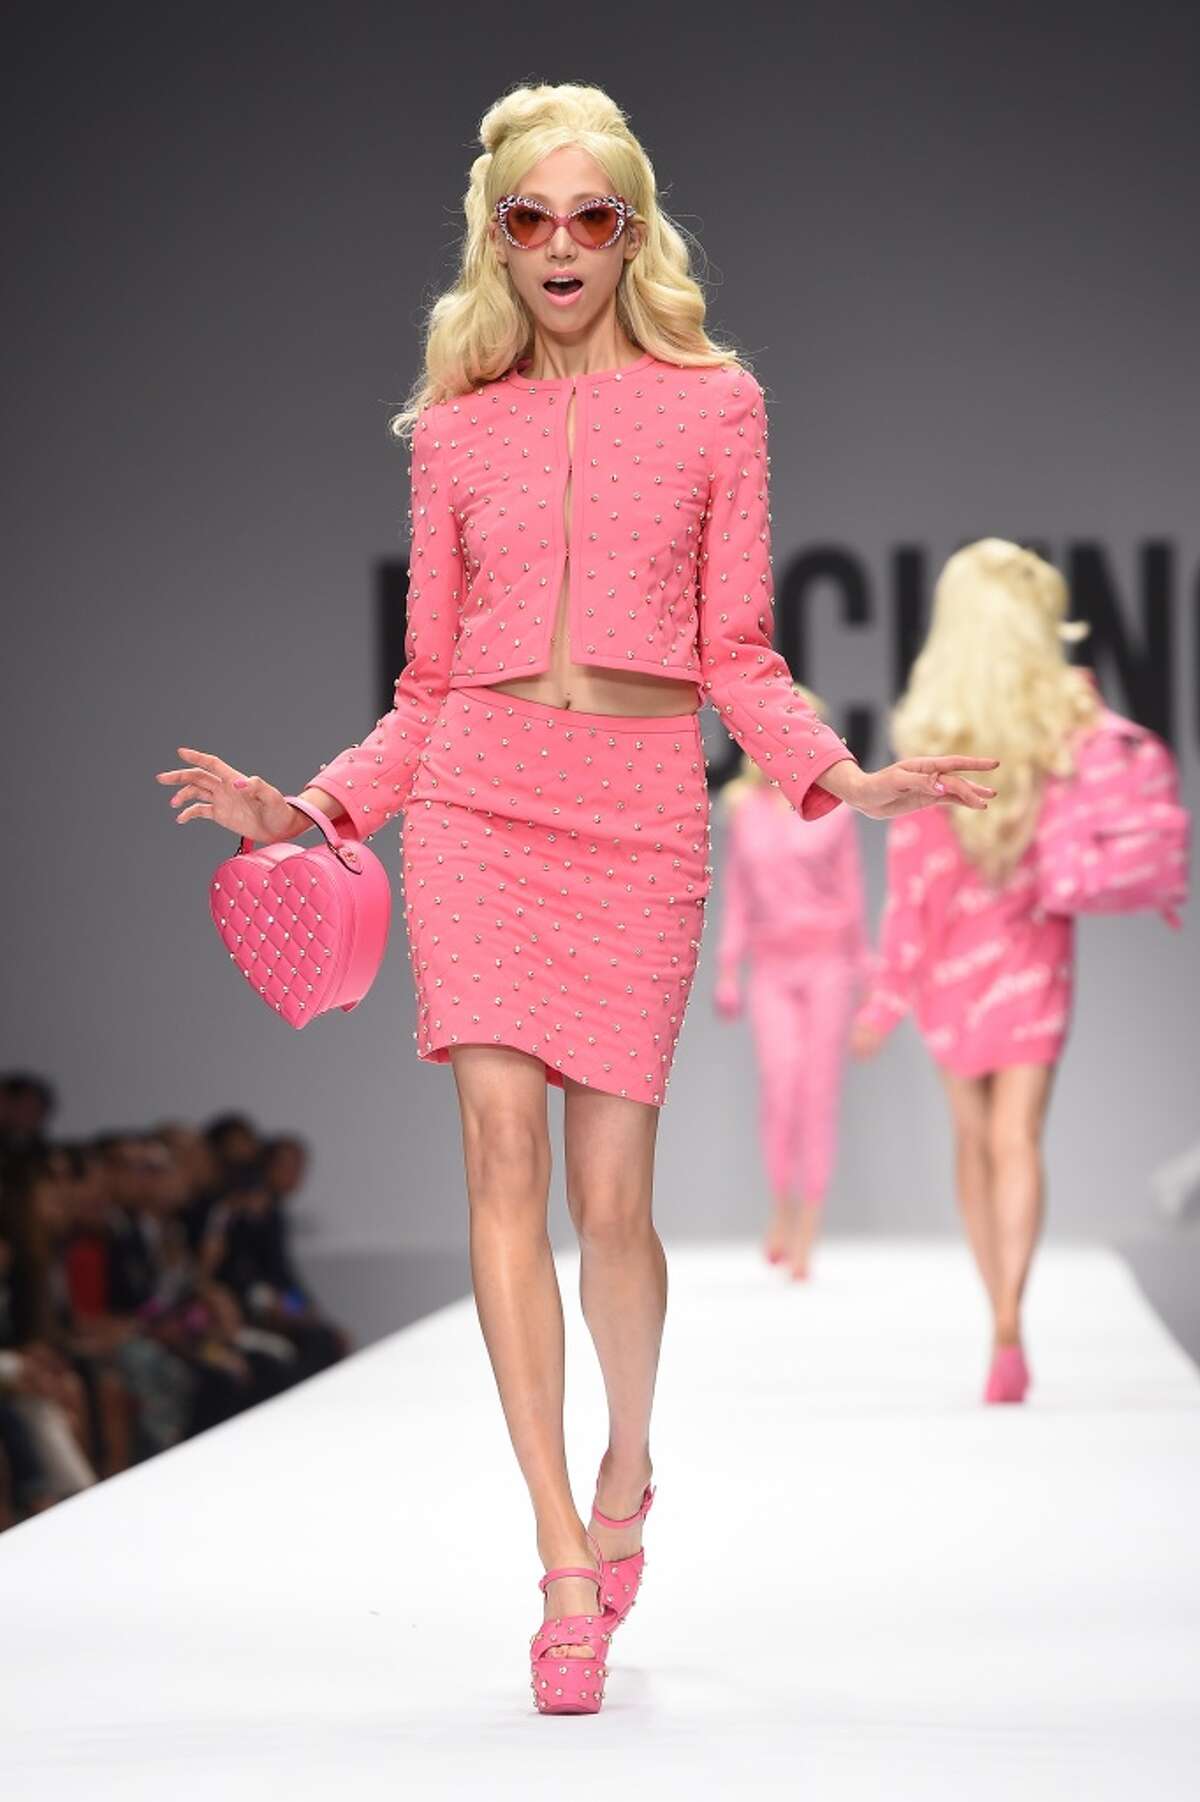 Barbie on the catwalk